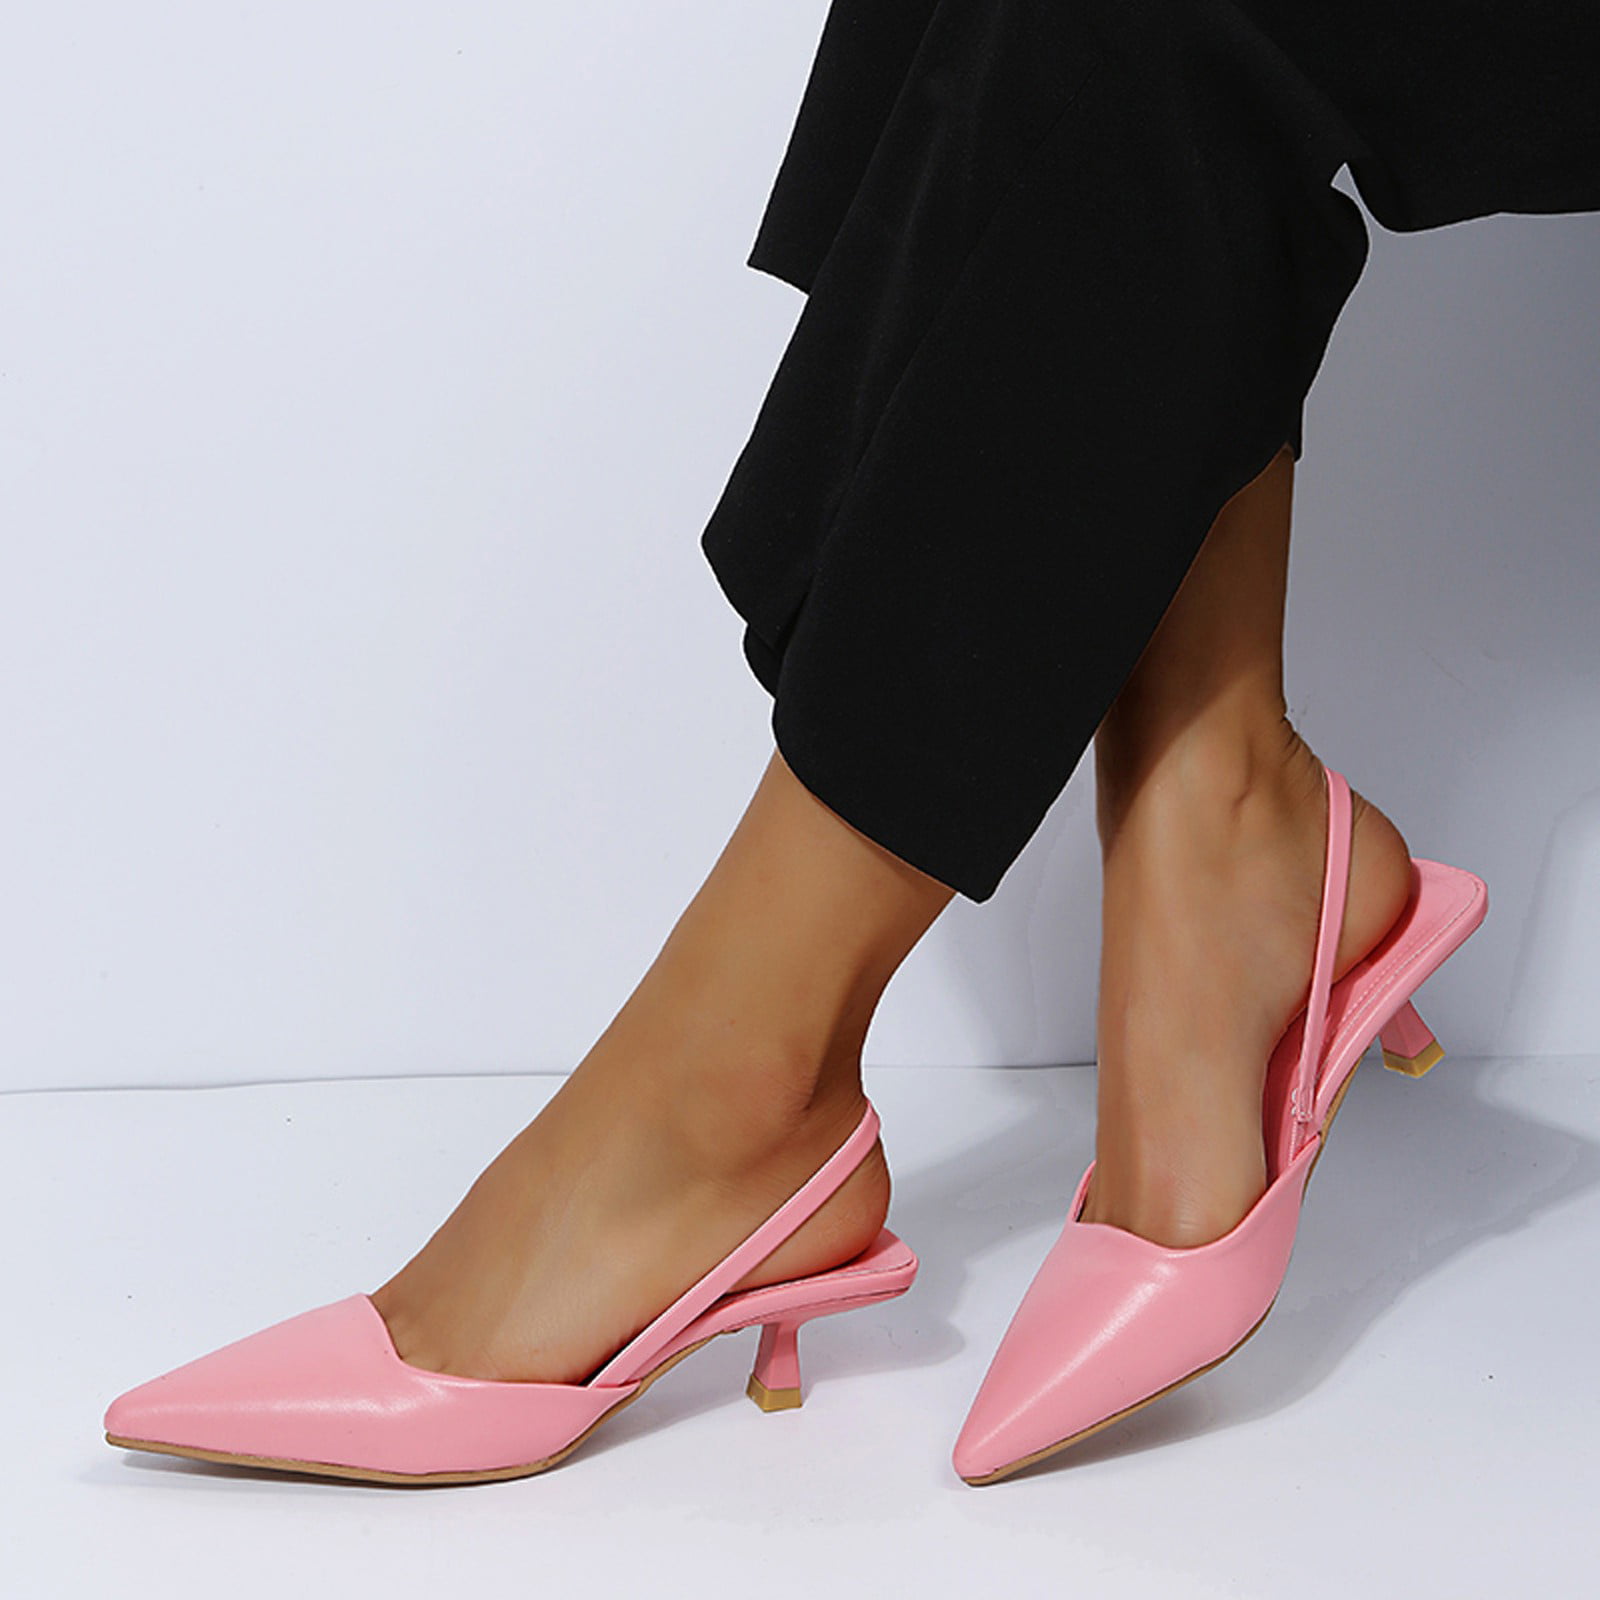 Pink Heels for sale in Chaguanas, Trinidad and Tobago | Facebook  Marketplace | Facebook